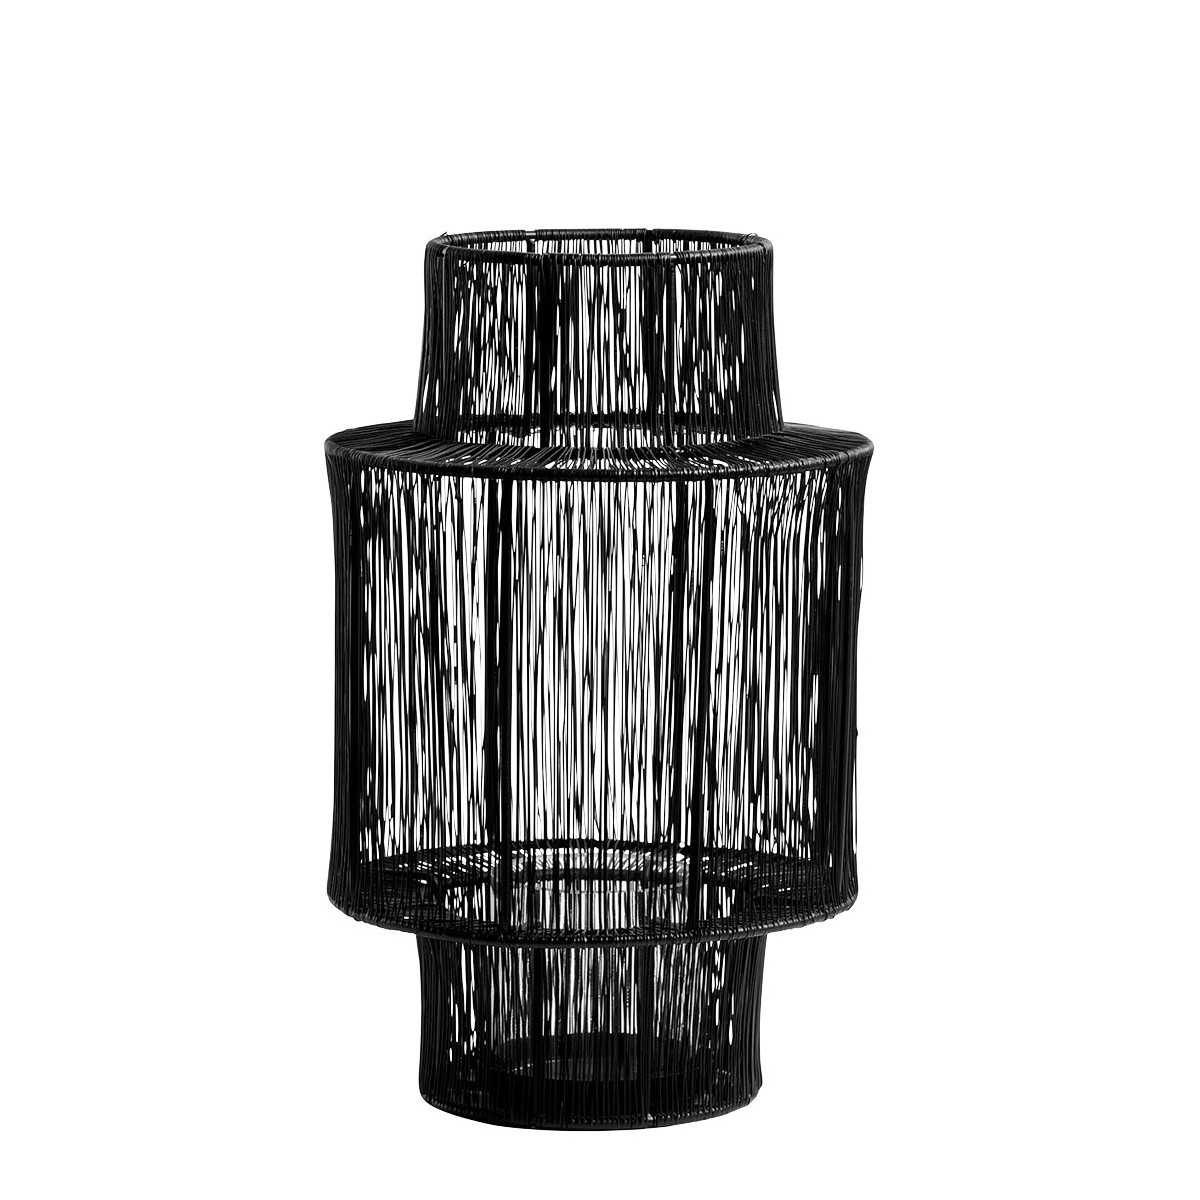 INTERIEUR- DECORATION|Lanterne ARIANE in black metal - Small model - H. 36 cmBLANC D'IVOIREVotives and Lanterns